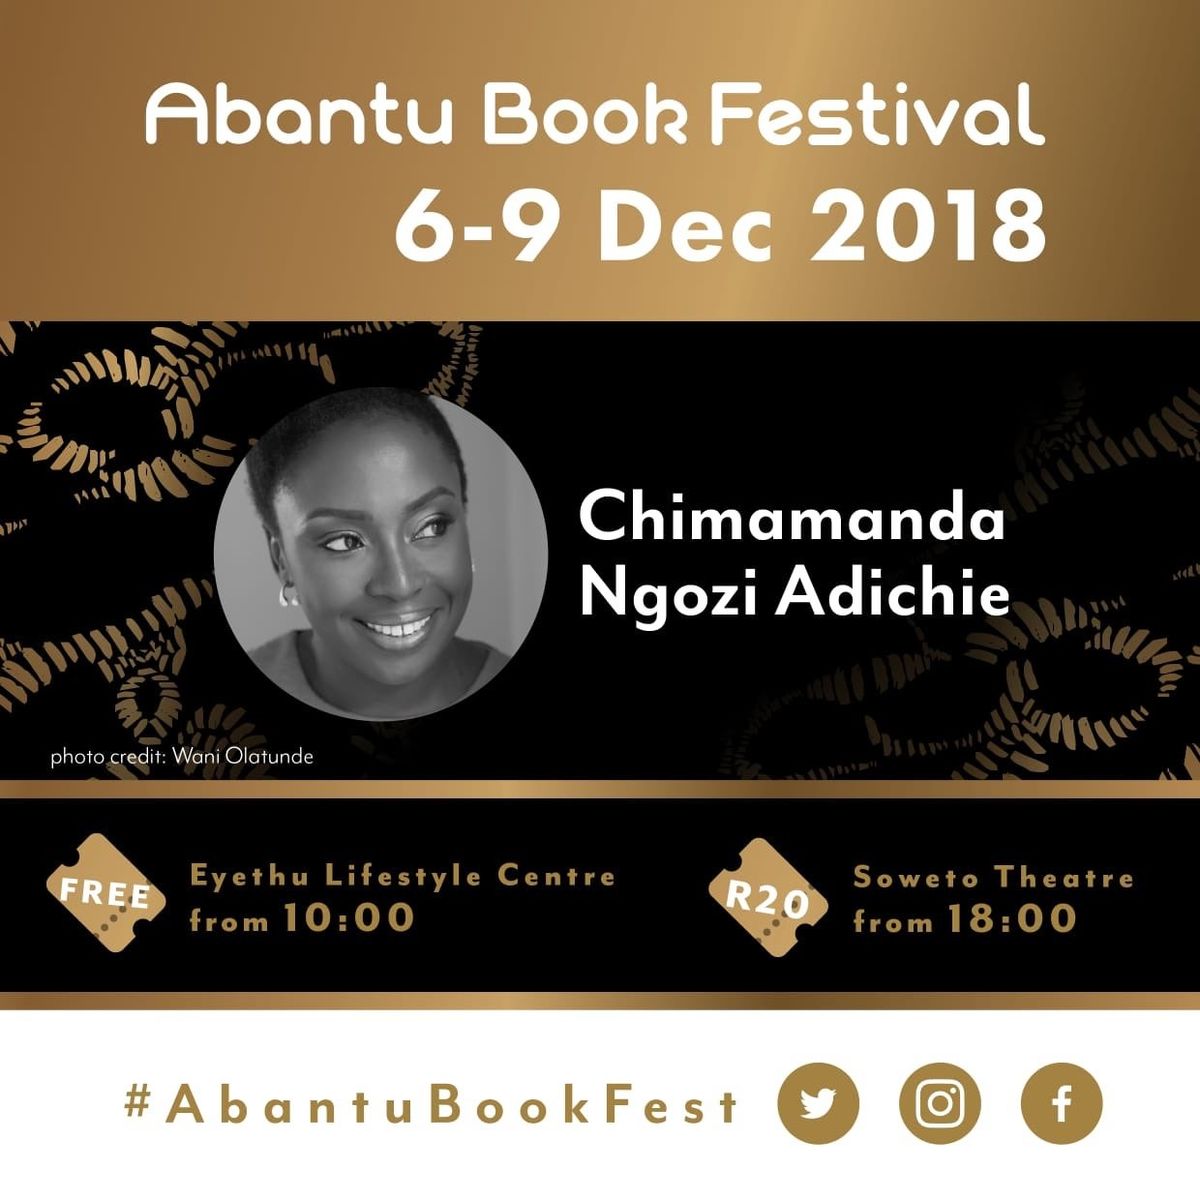 Chimamanda Ngozi Adichie Will Be At This Year’s Abantu Book Festival In Soweto